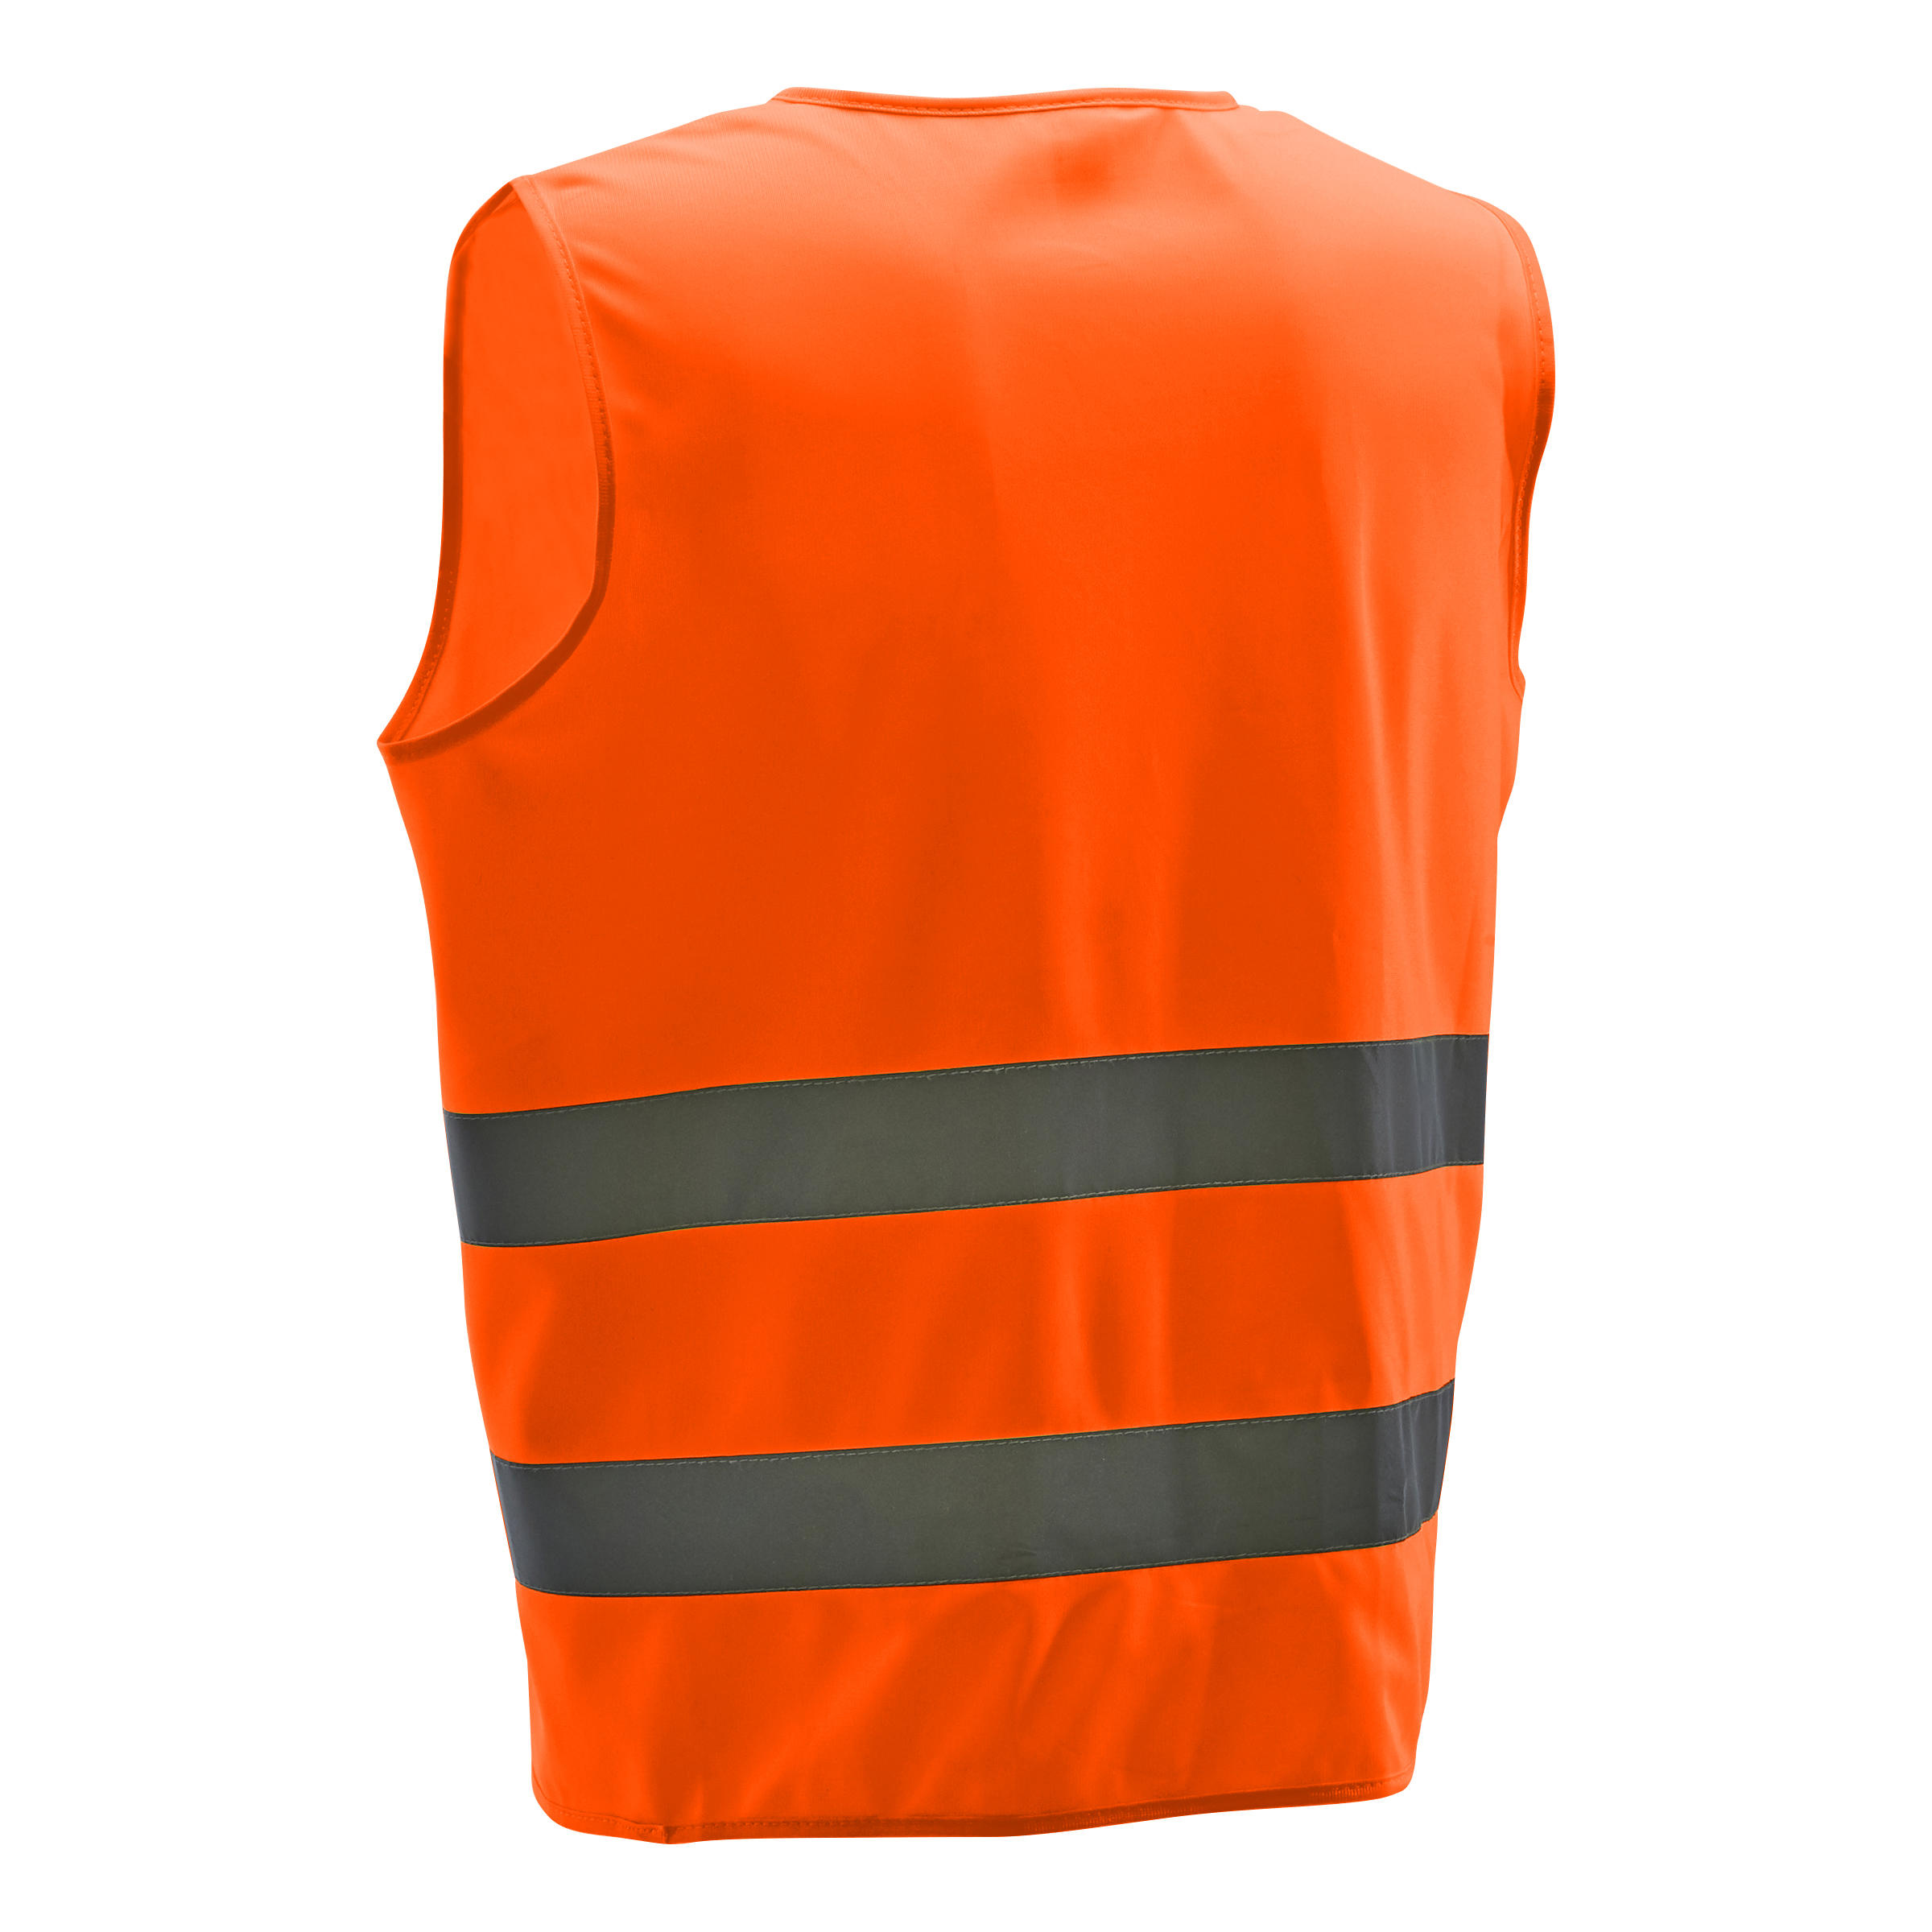 Adult High Visibility Safety Vest 500 - Neon Orange 2/3